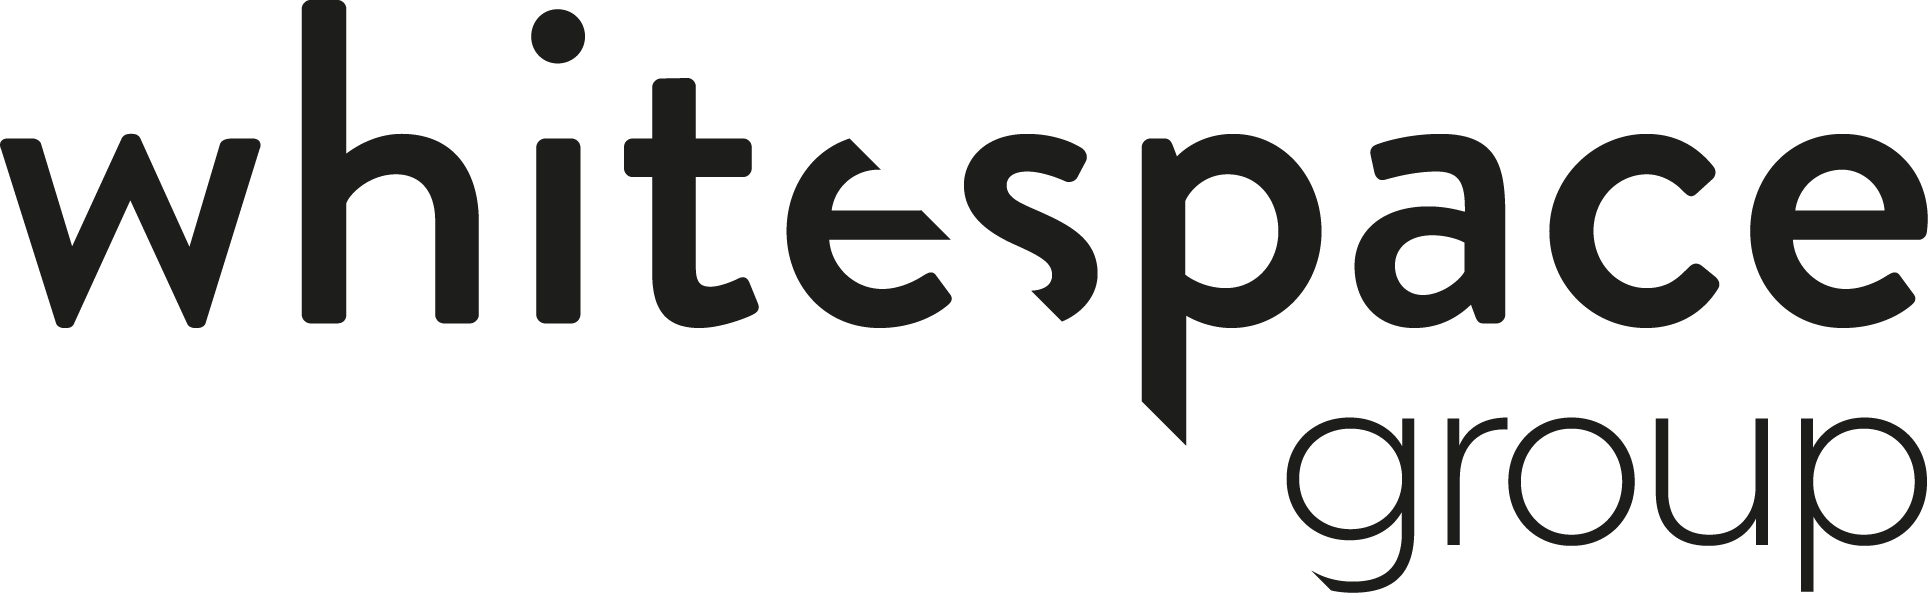 Whitespace Logo